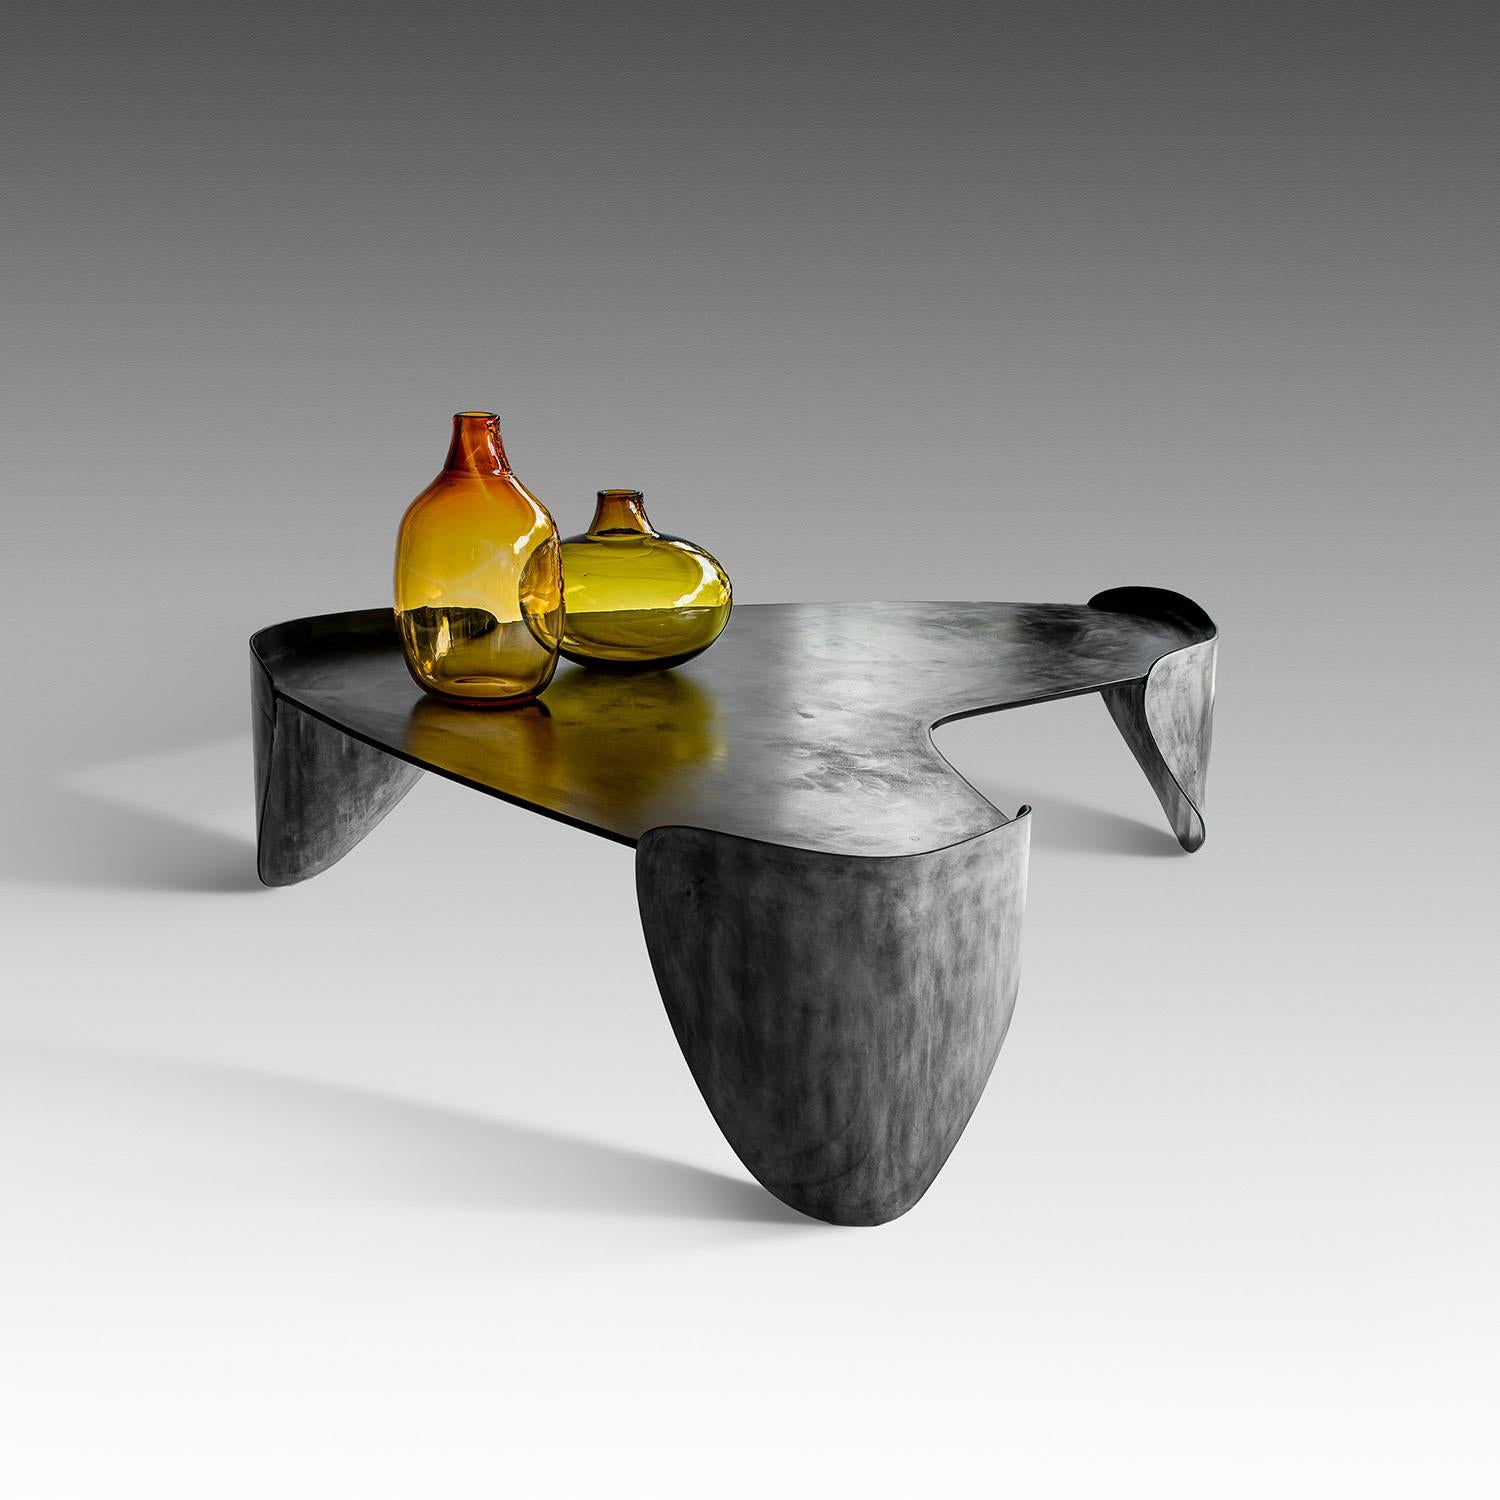 Portuguese Contemporary Aluminium & Steel Coffee Table, Laguna by Adam Court for Okha For Sale